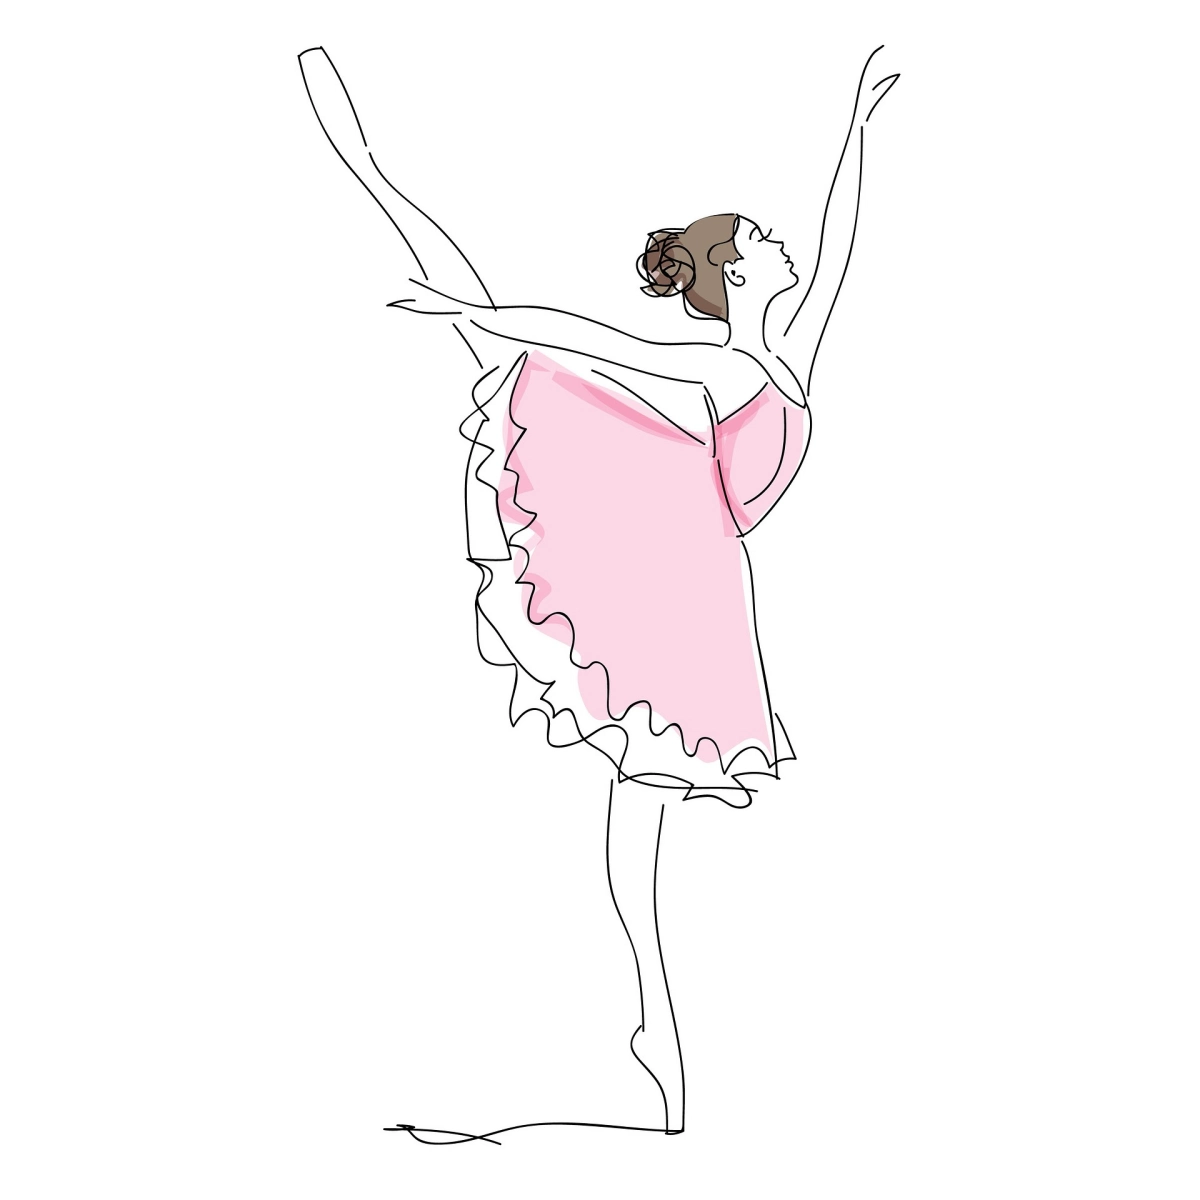 dessin ballerine danseuse robe rose tutu cheveux en chignon haut